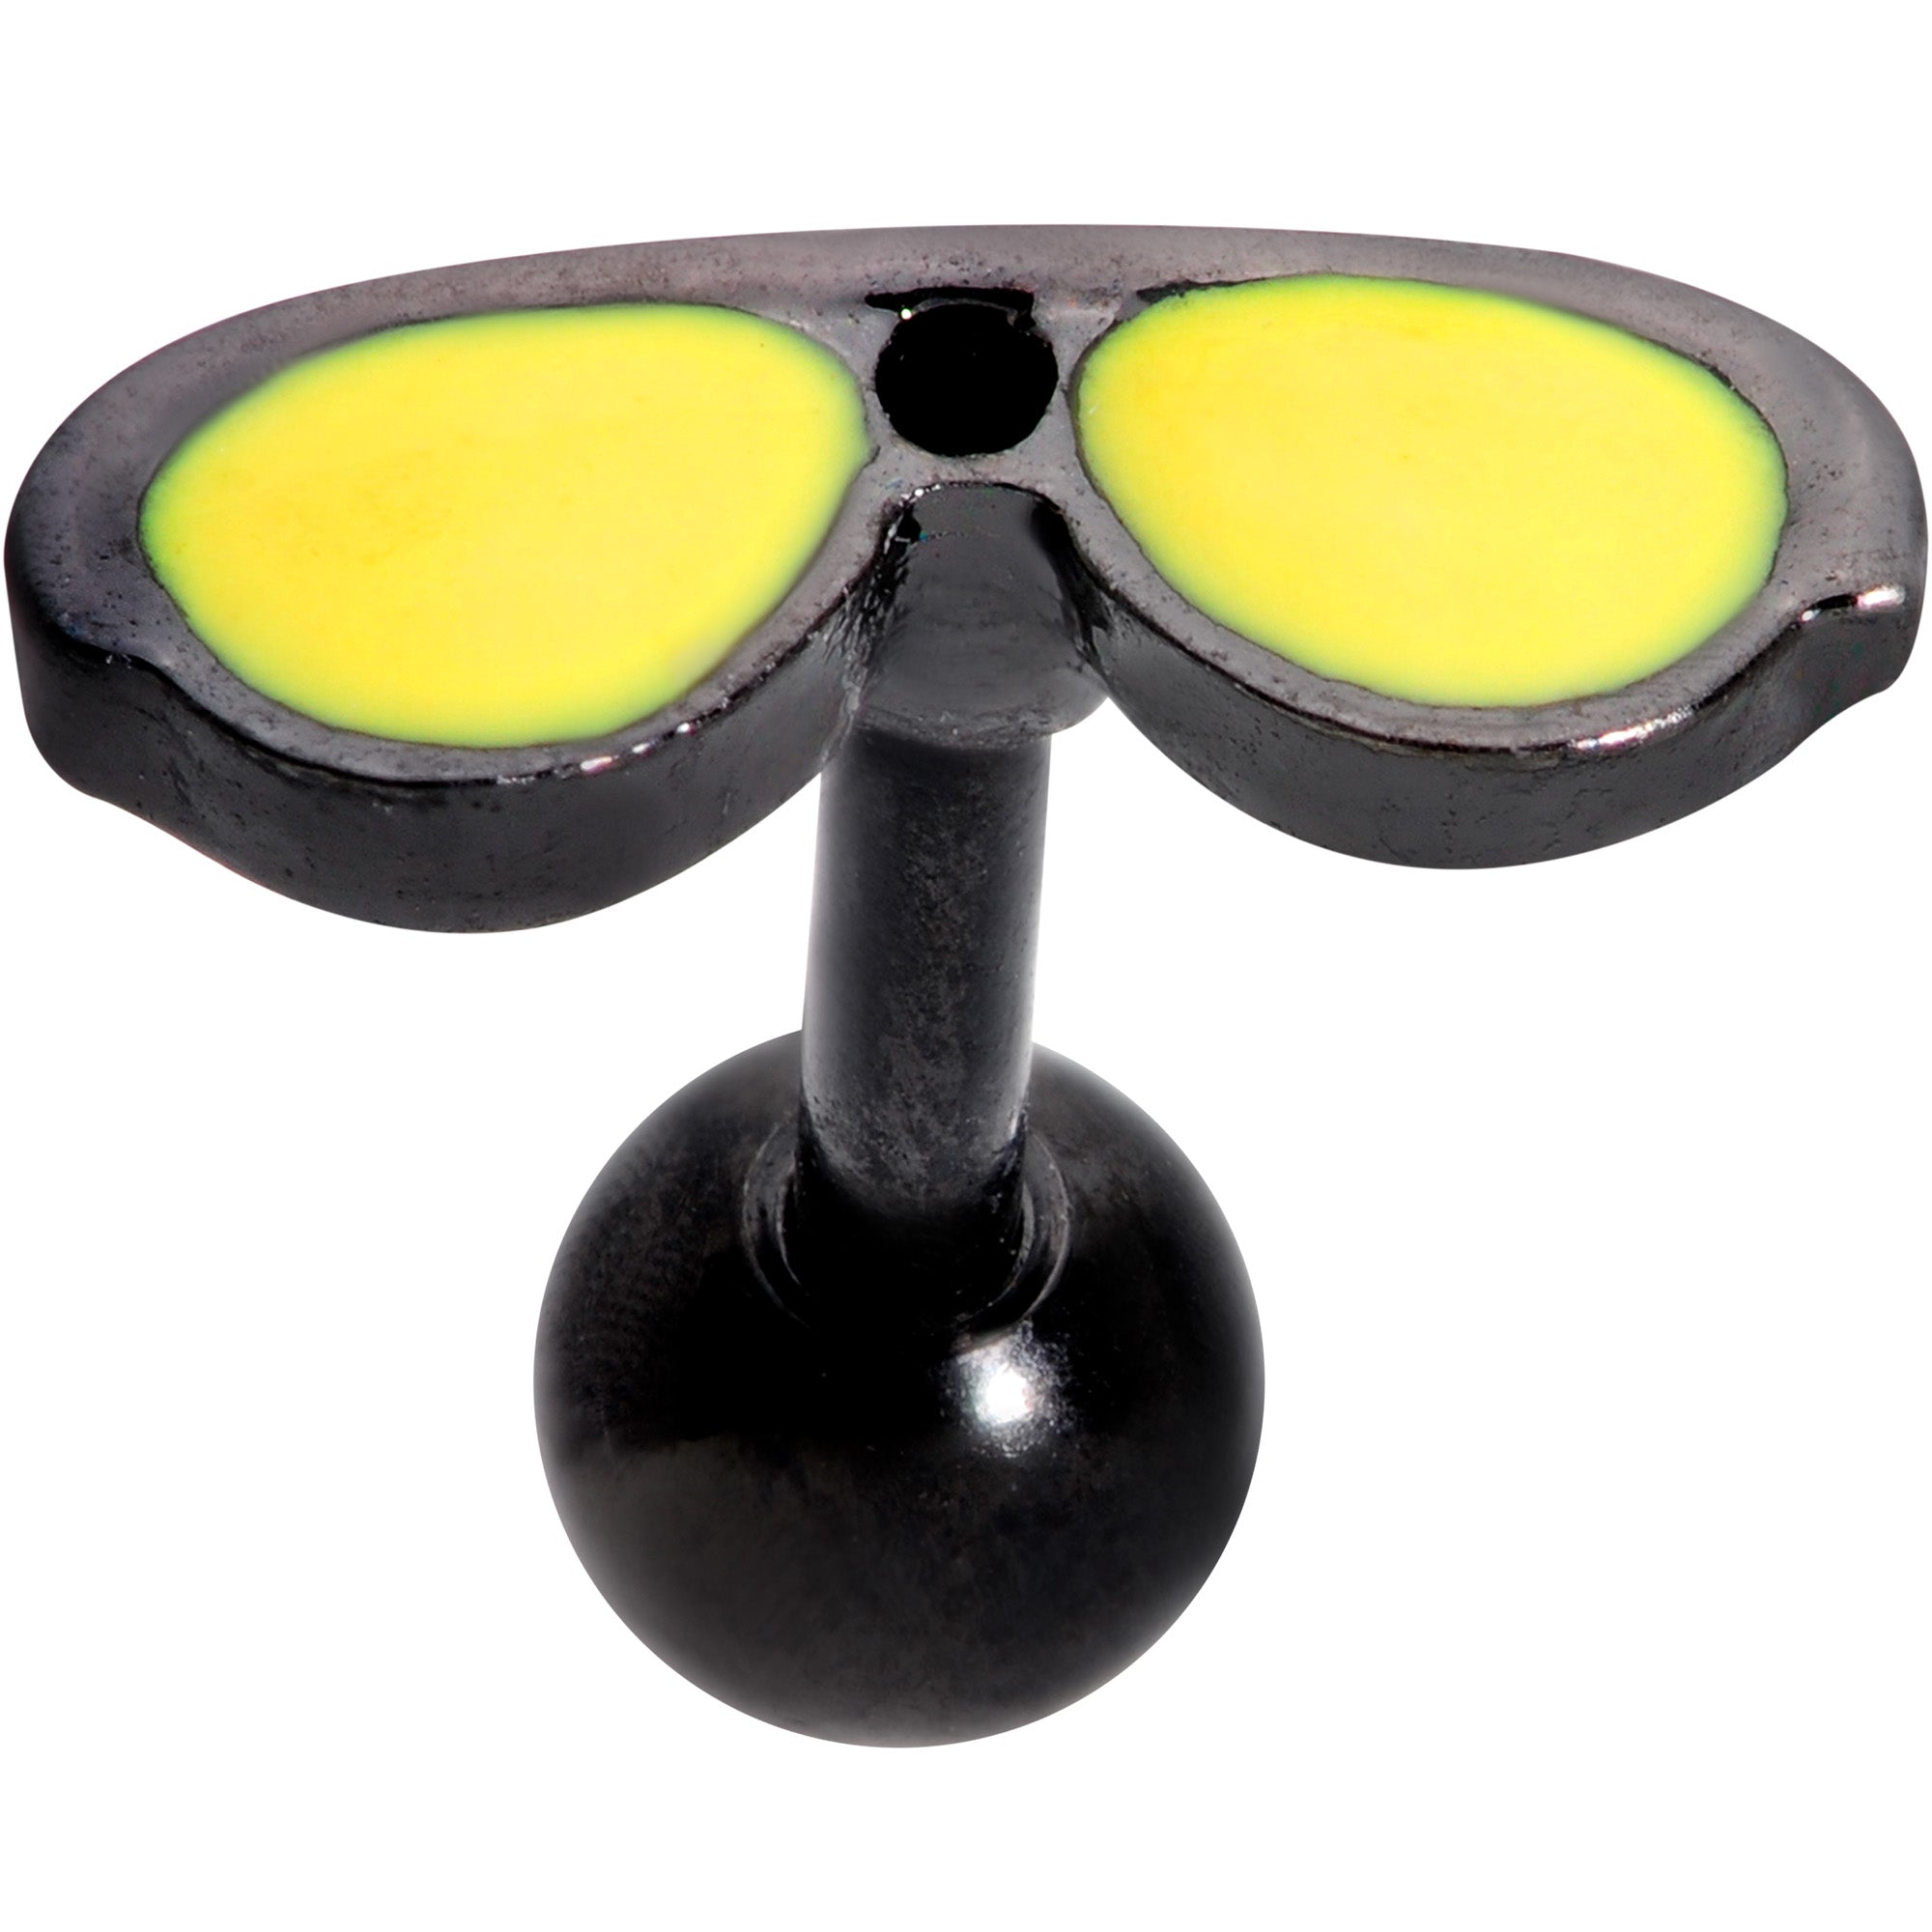 16 Gauge 5/16 Yellow Black Aviator Sunglasses Cartilage Tragus Earring